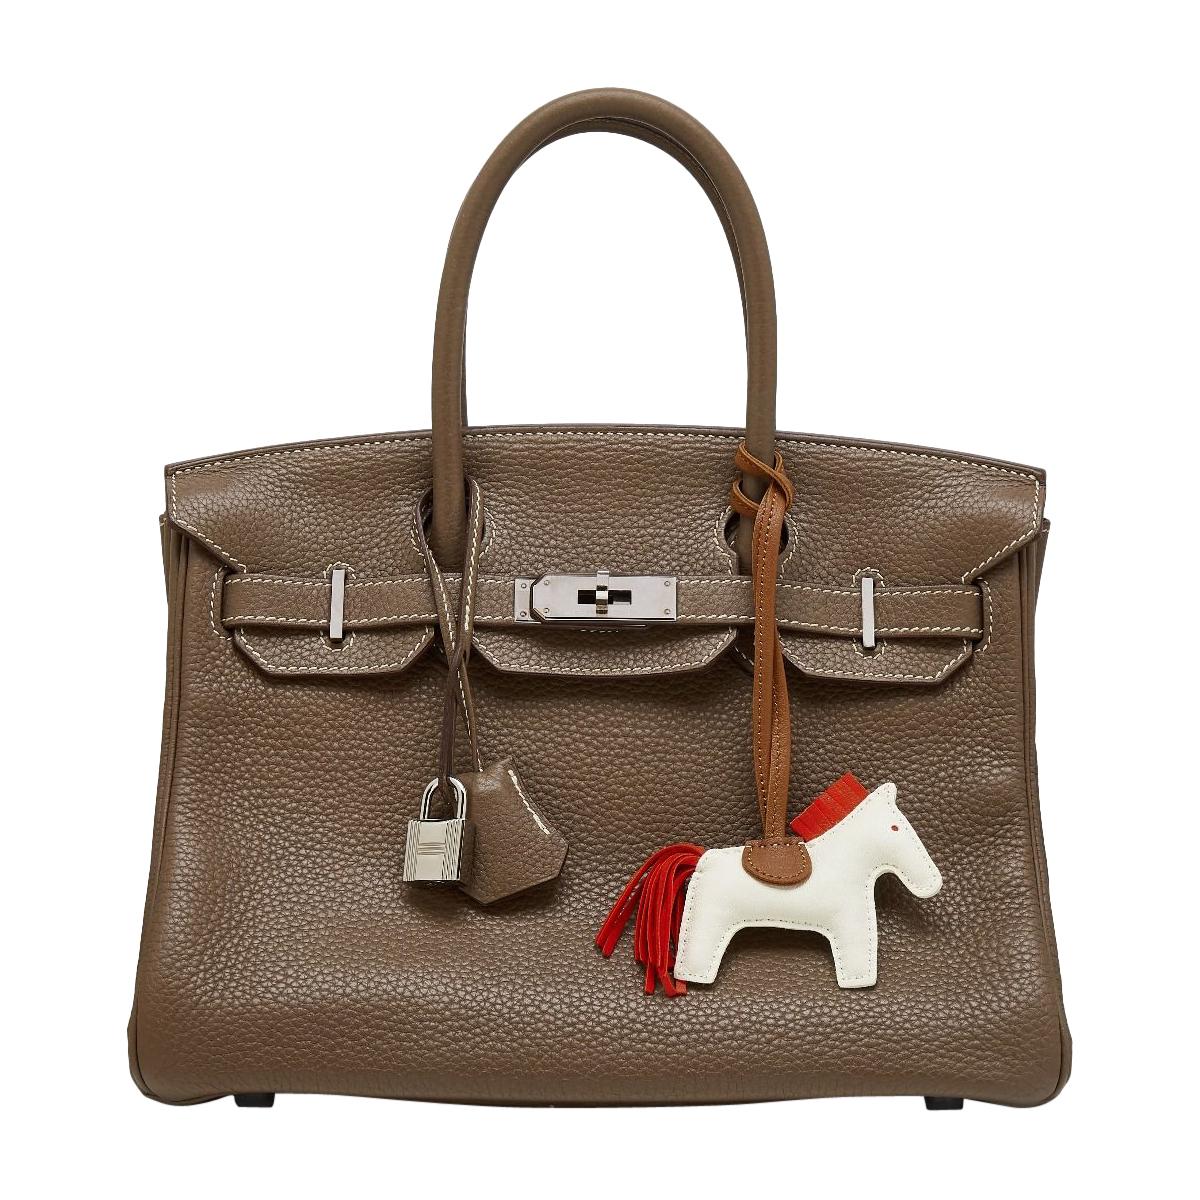 Hermès Etoupe 30cm Birkin Bag